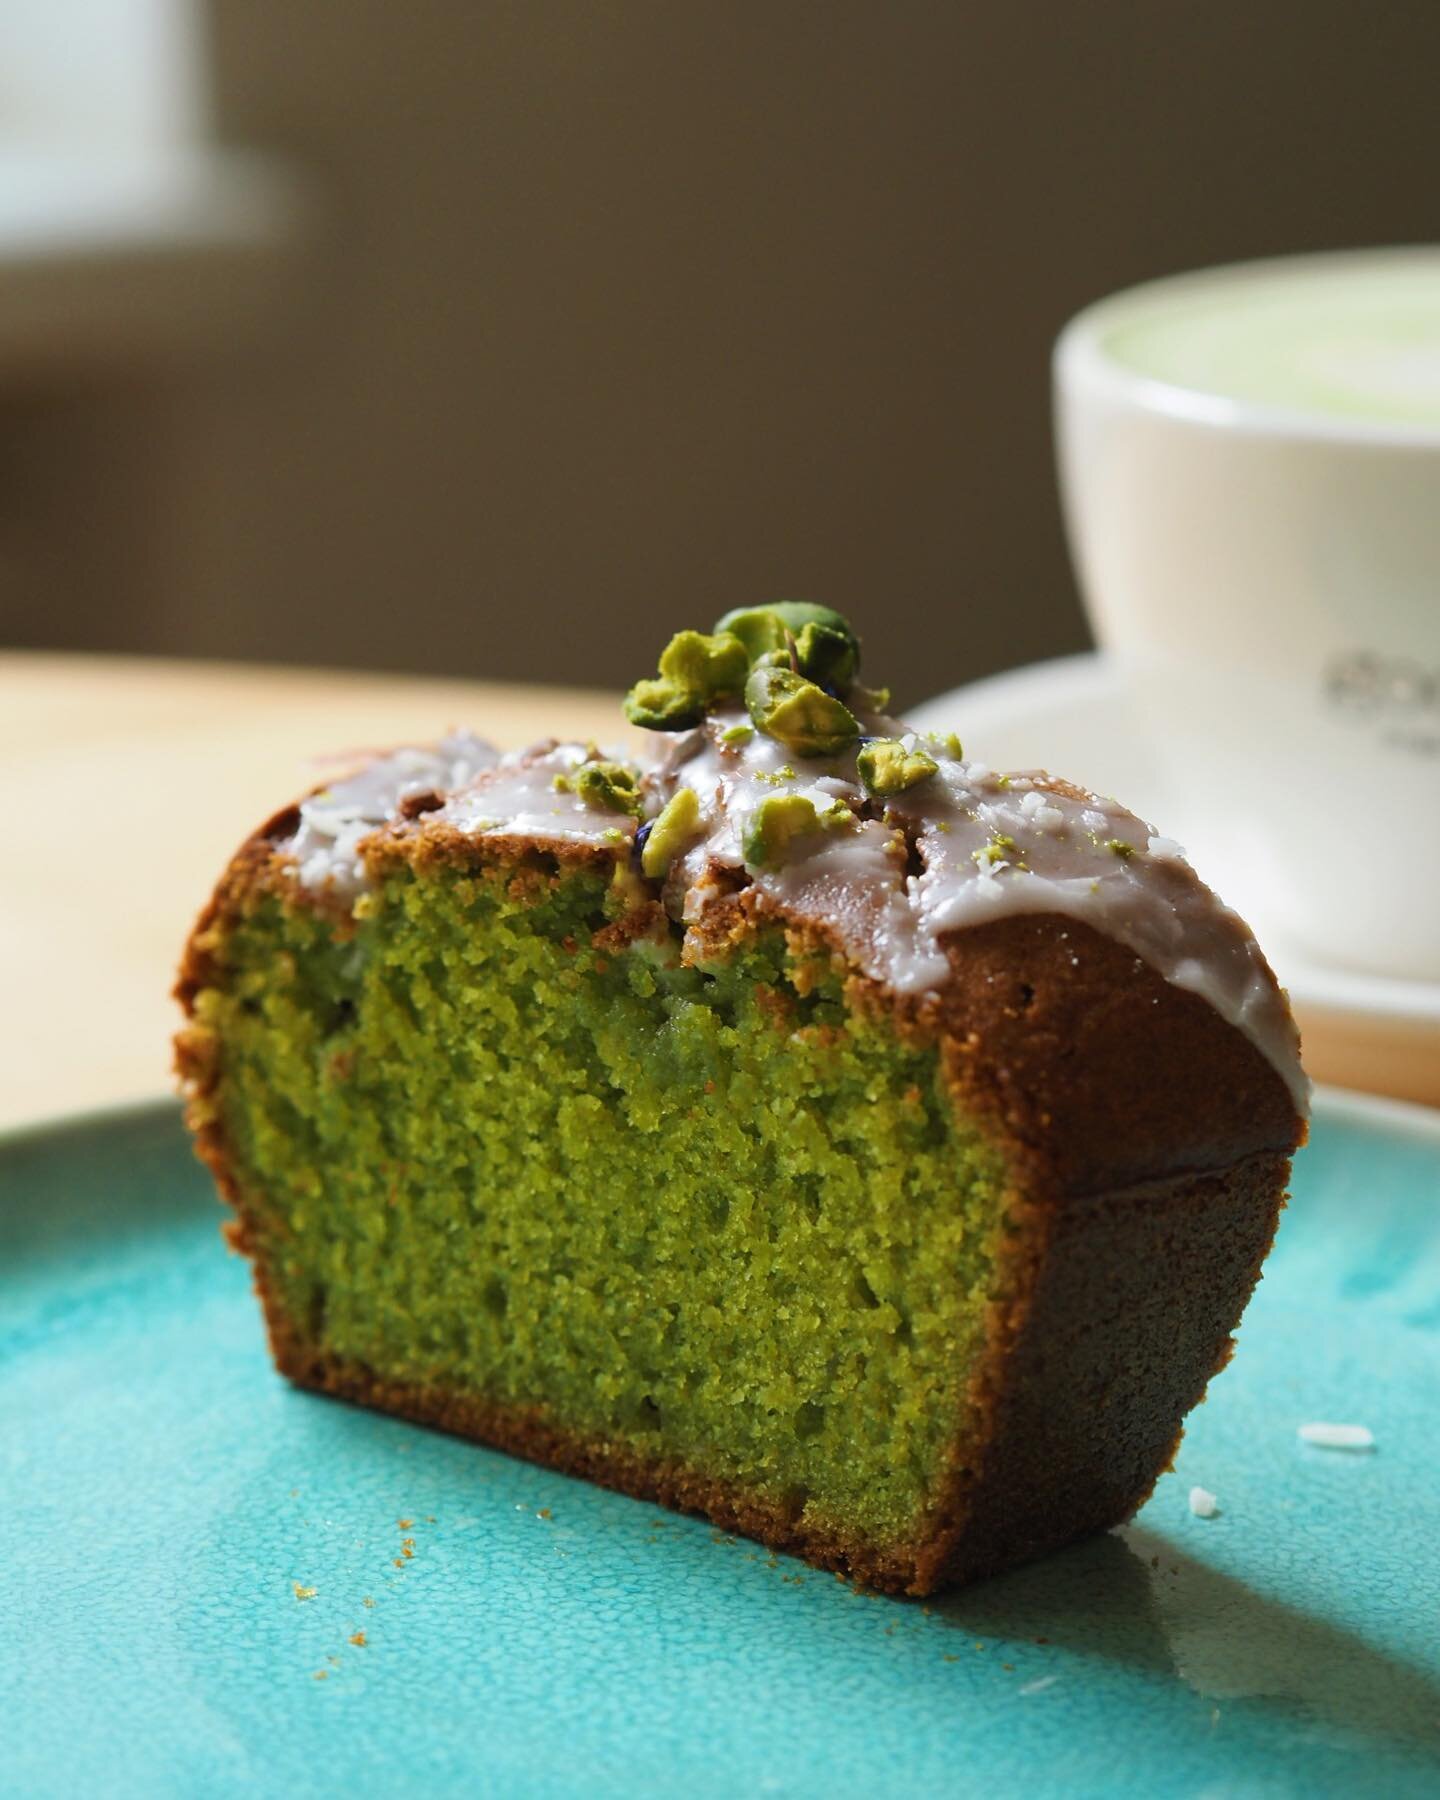 Lemon pistachio cake is back again! come in for a yummy slice 🌿😍🌱 

#vegan #hamburg #cafe #plantbased #cake